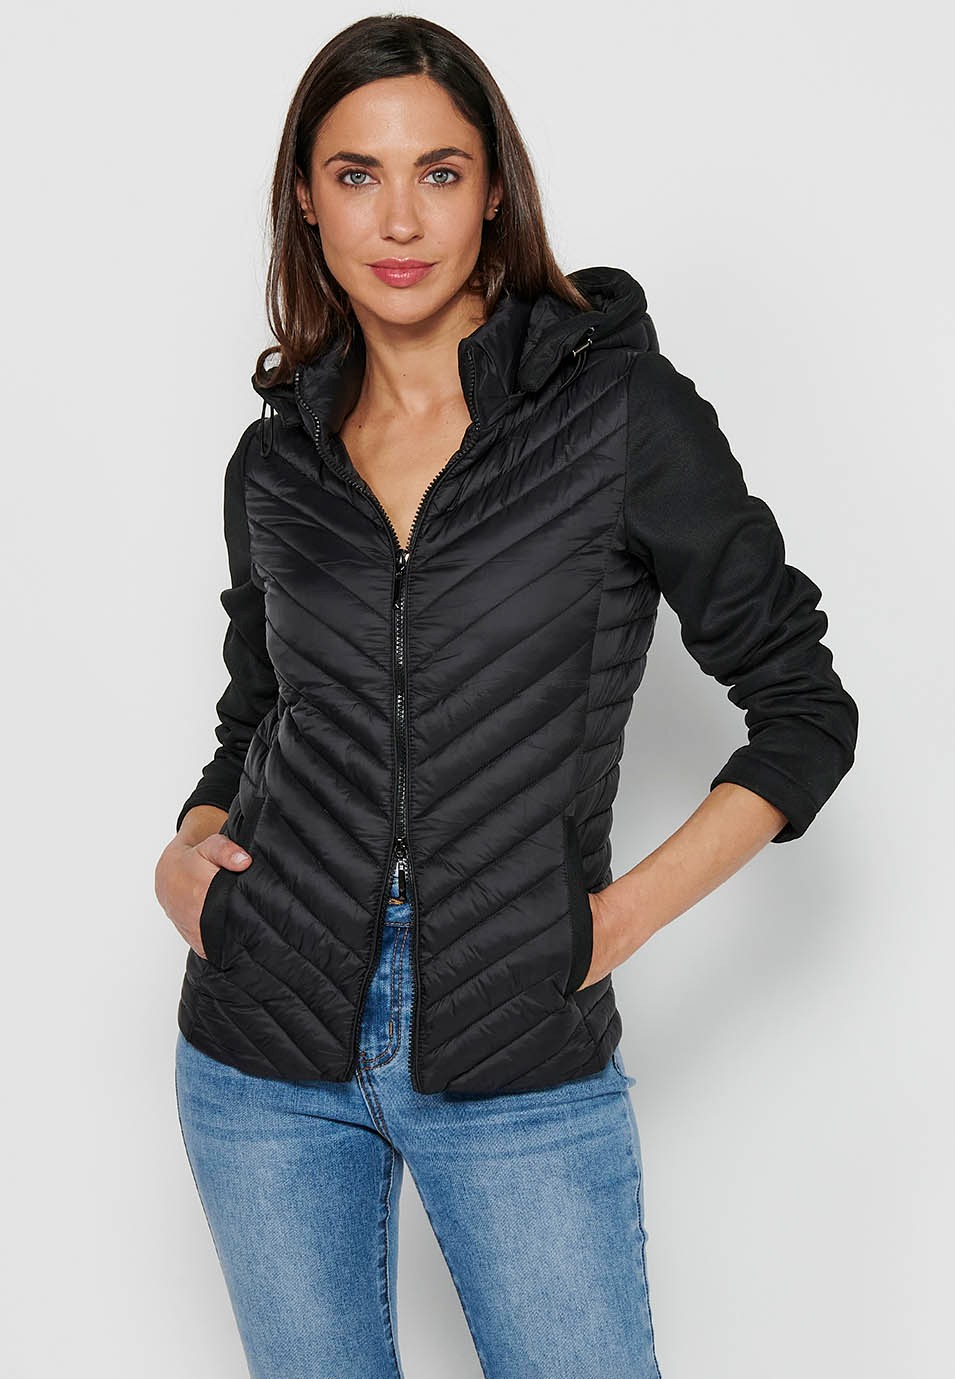 Women's Black Hooded Collar Long Sleeve Zipper Front Closure Jacket